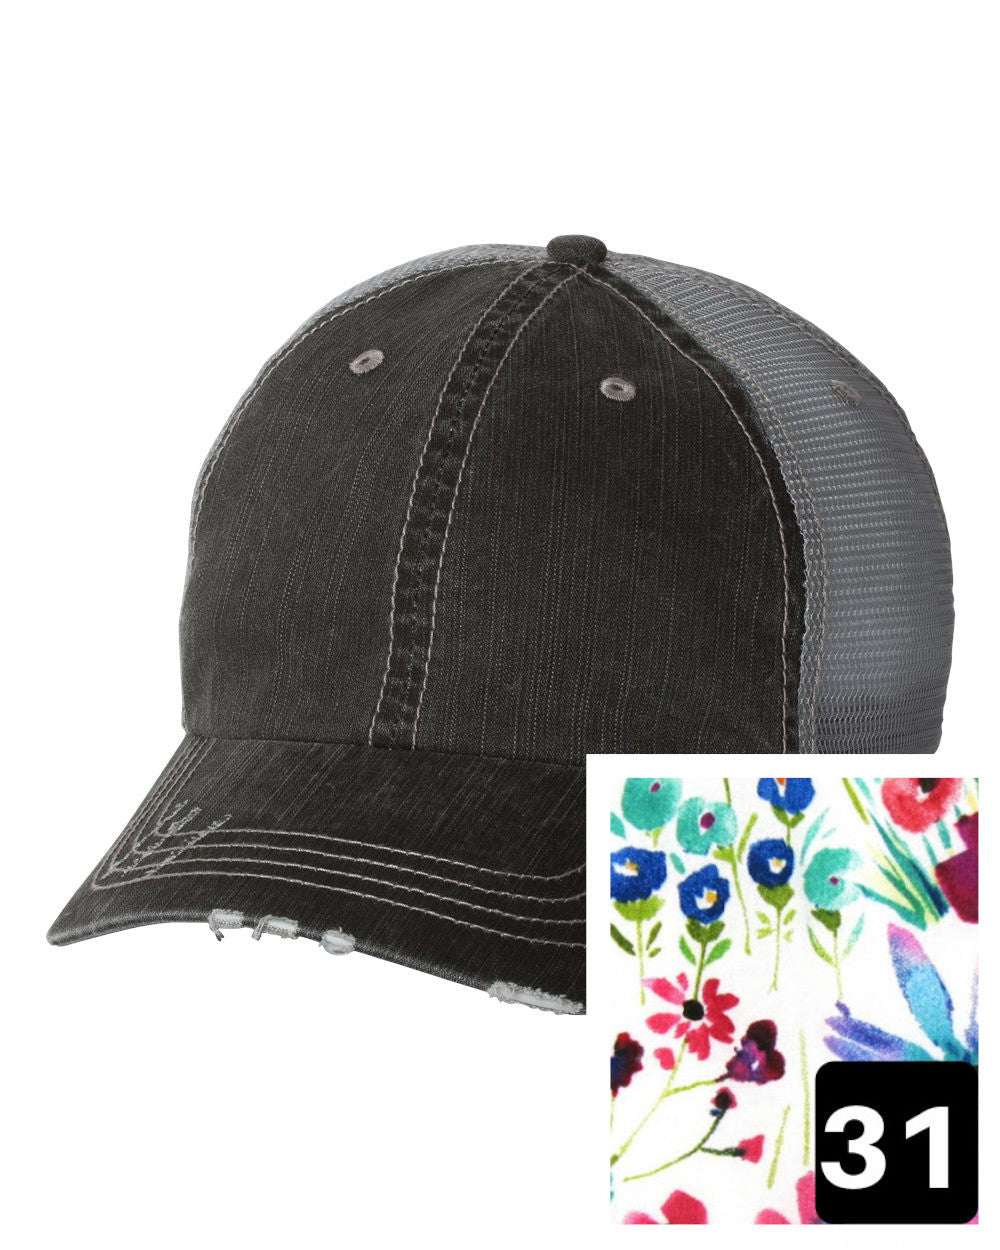 gray distressed trucker hat with gray polka dot fabric state of Nebraska